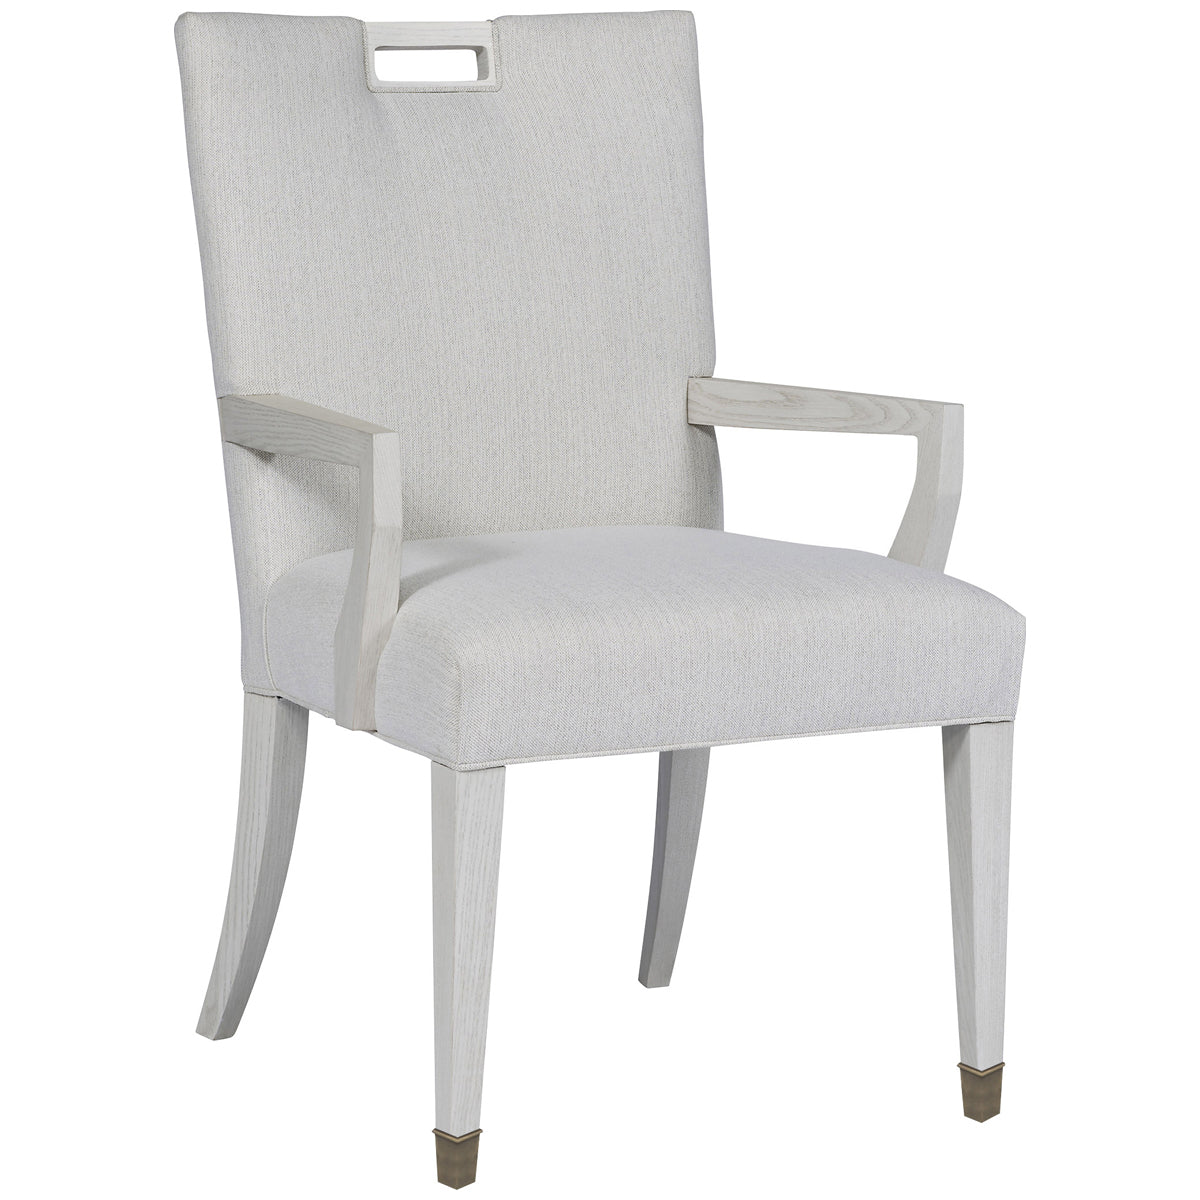 Vanguard Furniture Parkhurst Stocked Performance Dining Arm Chair